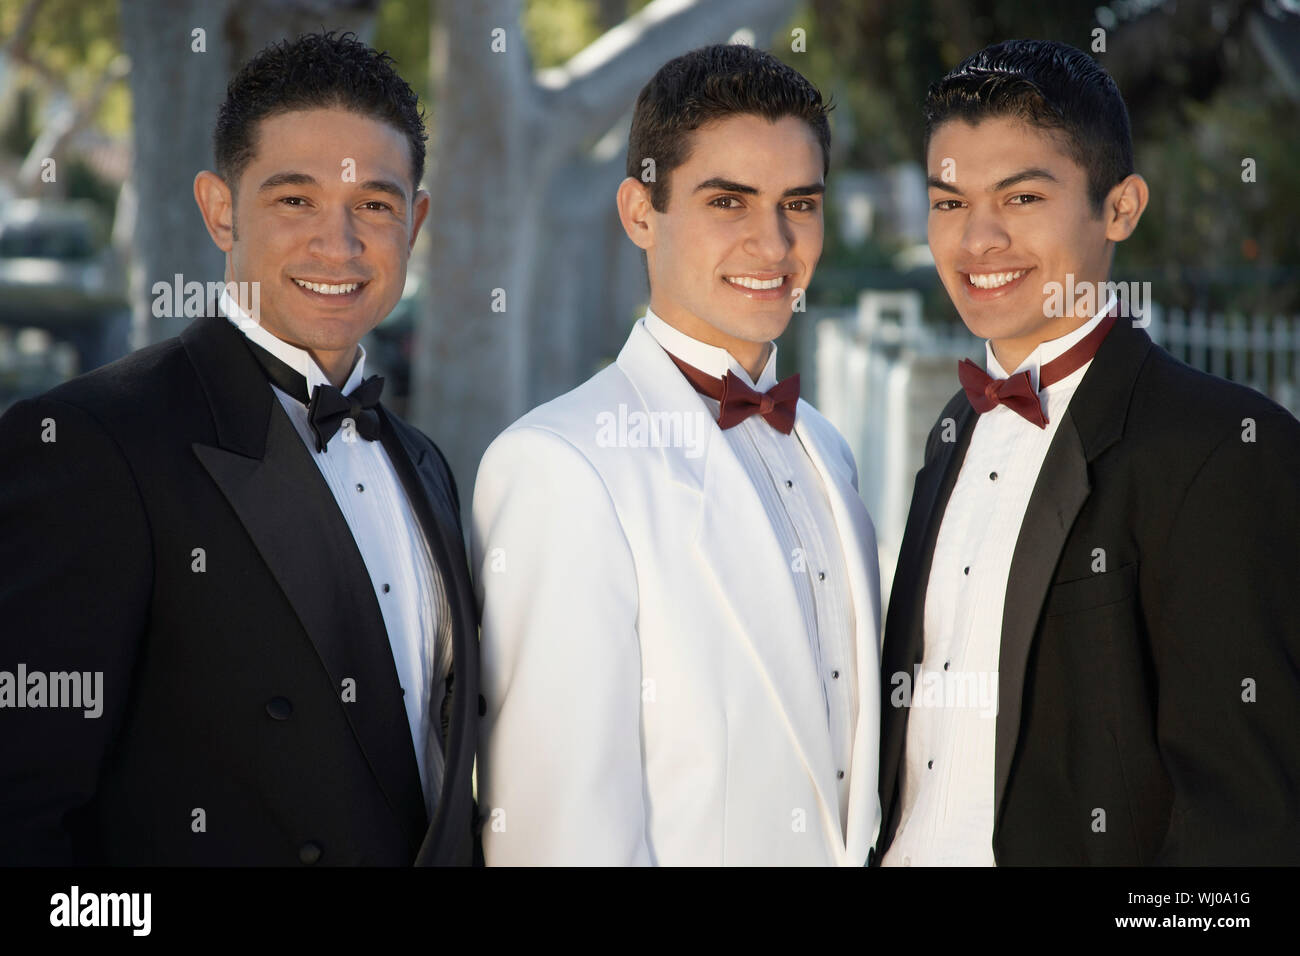 Portrait of three men wearing tuxedos outdoors Stock Photo